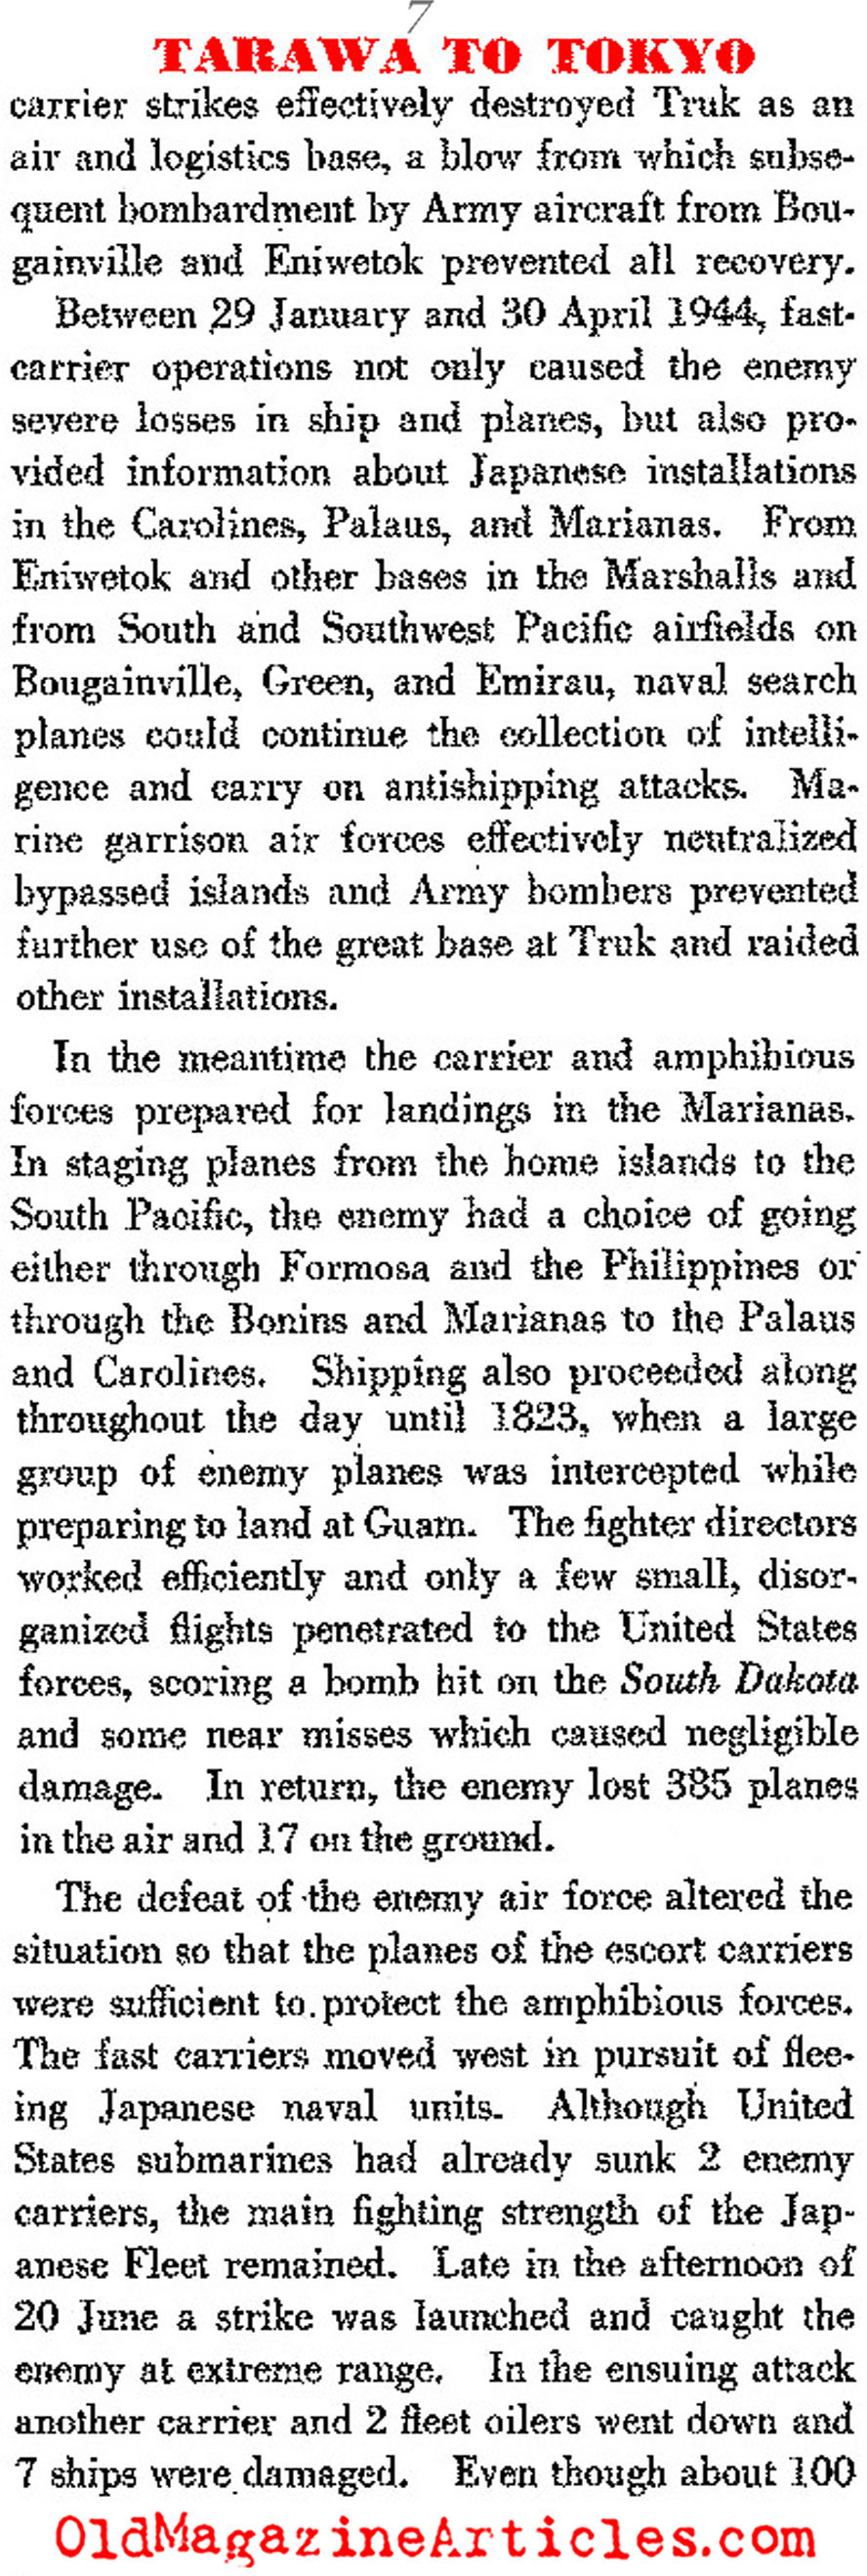 The U.S. Navy's War: Tarawa to Tokyo (Dept. of the Navy, 1947)